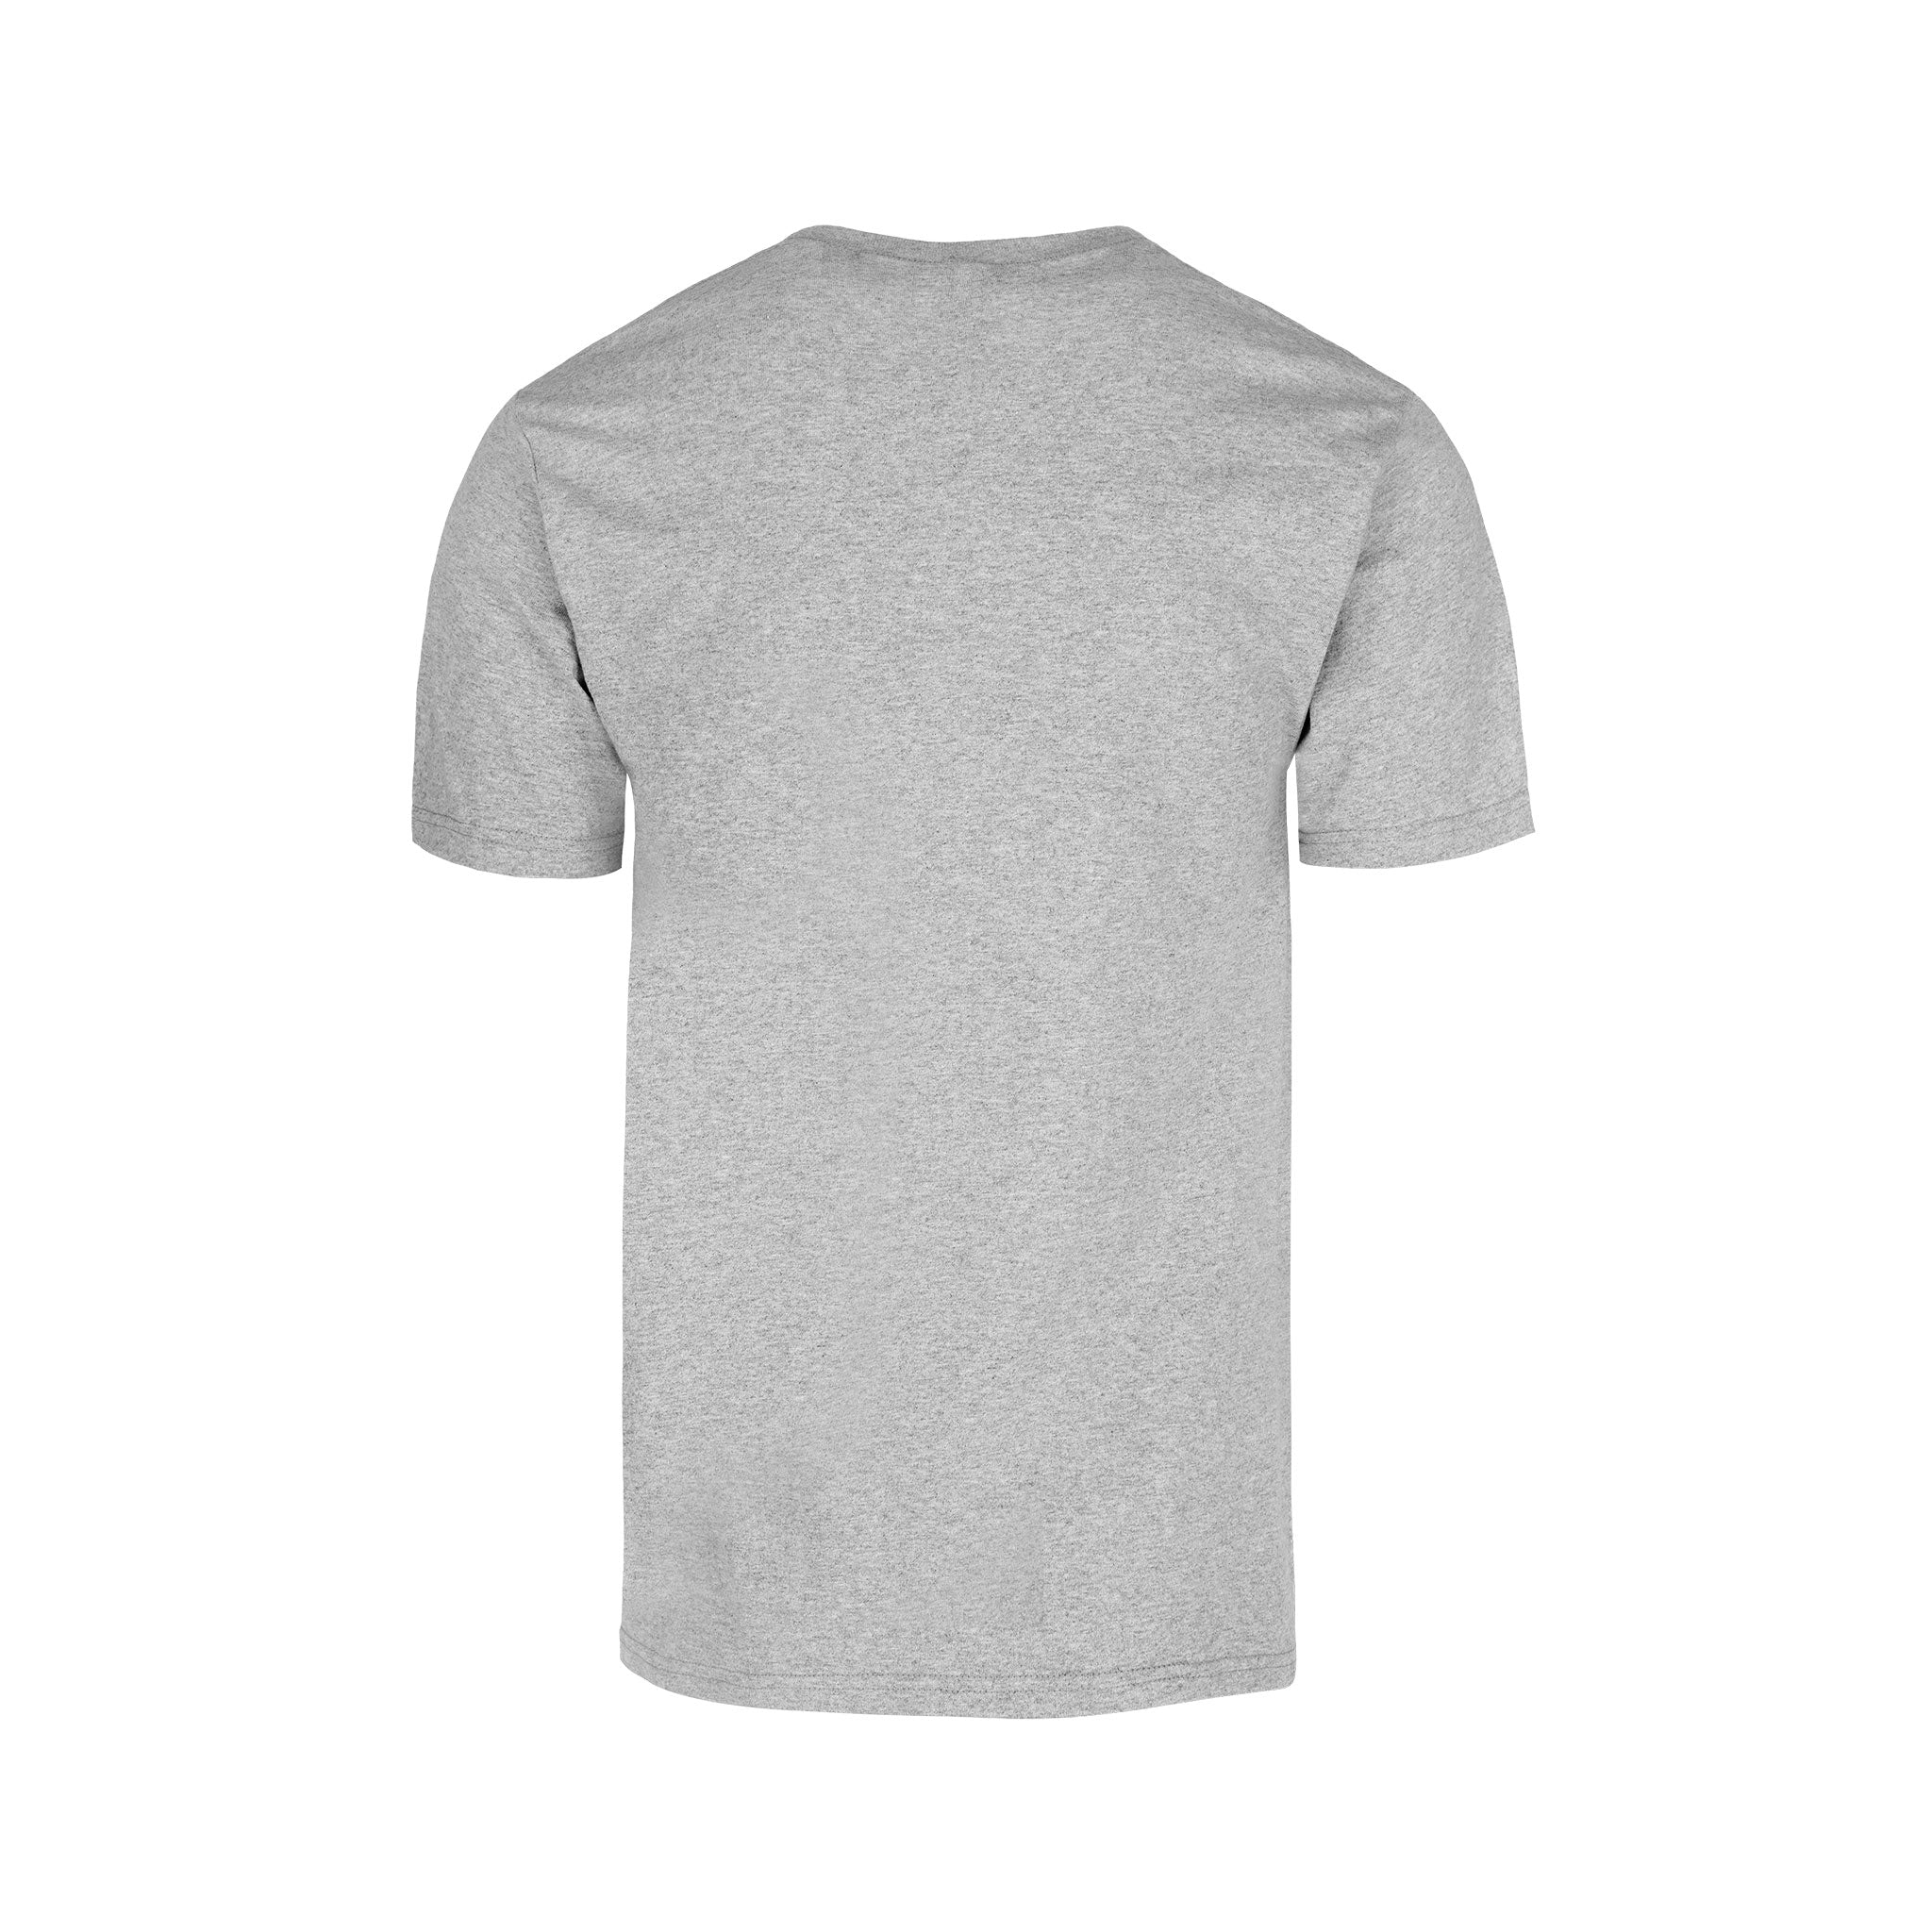 MRULIC mens t shirt Male Summer Casual Paper Plane Print T Shirt Blouse  Short Sleeve Round Neck Tops T Shirt Men T Shirts Grey + M